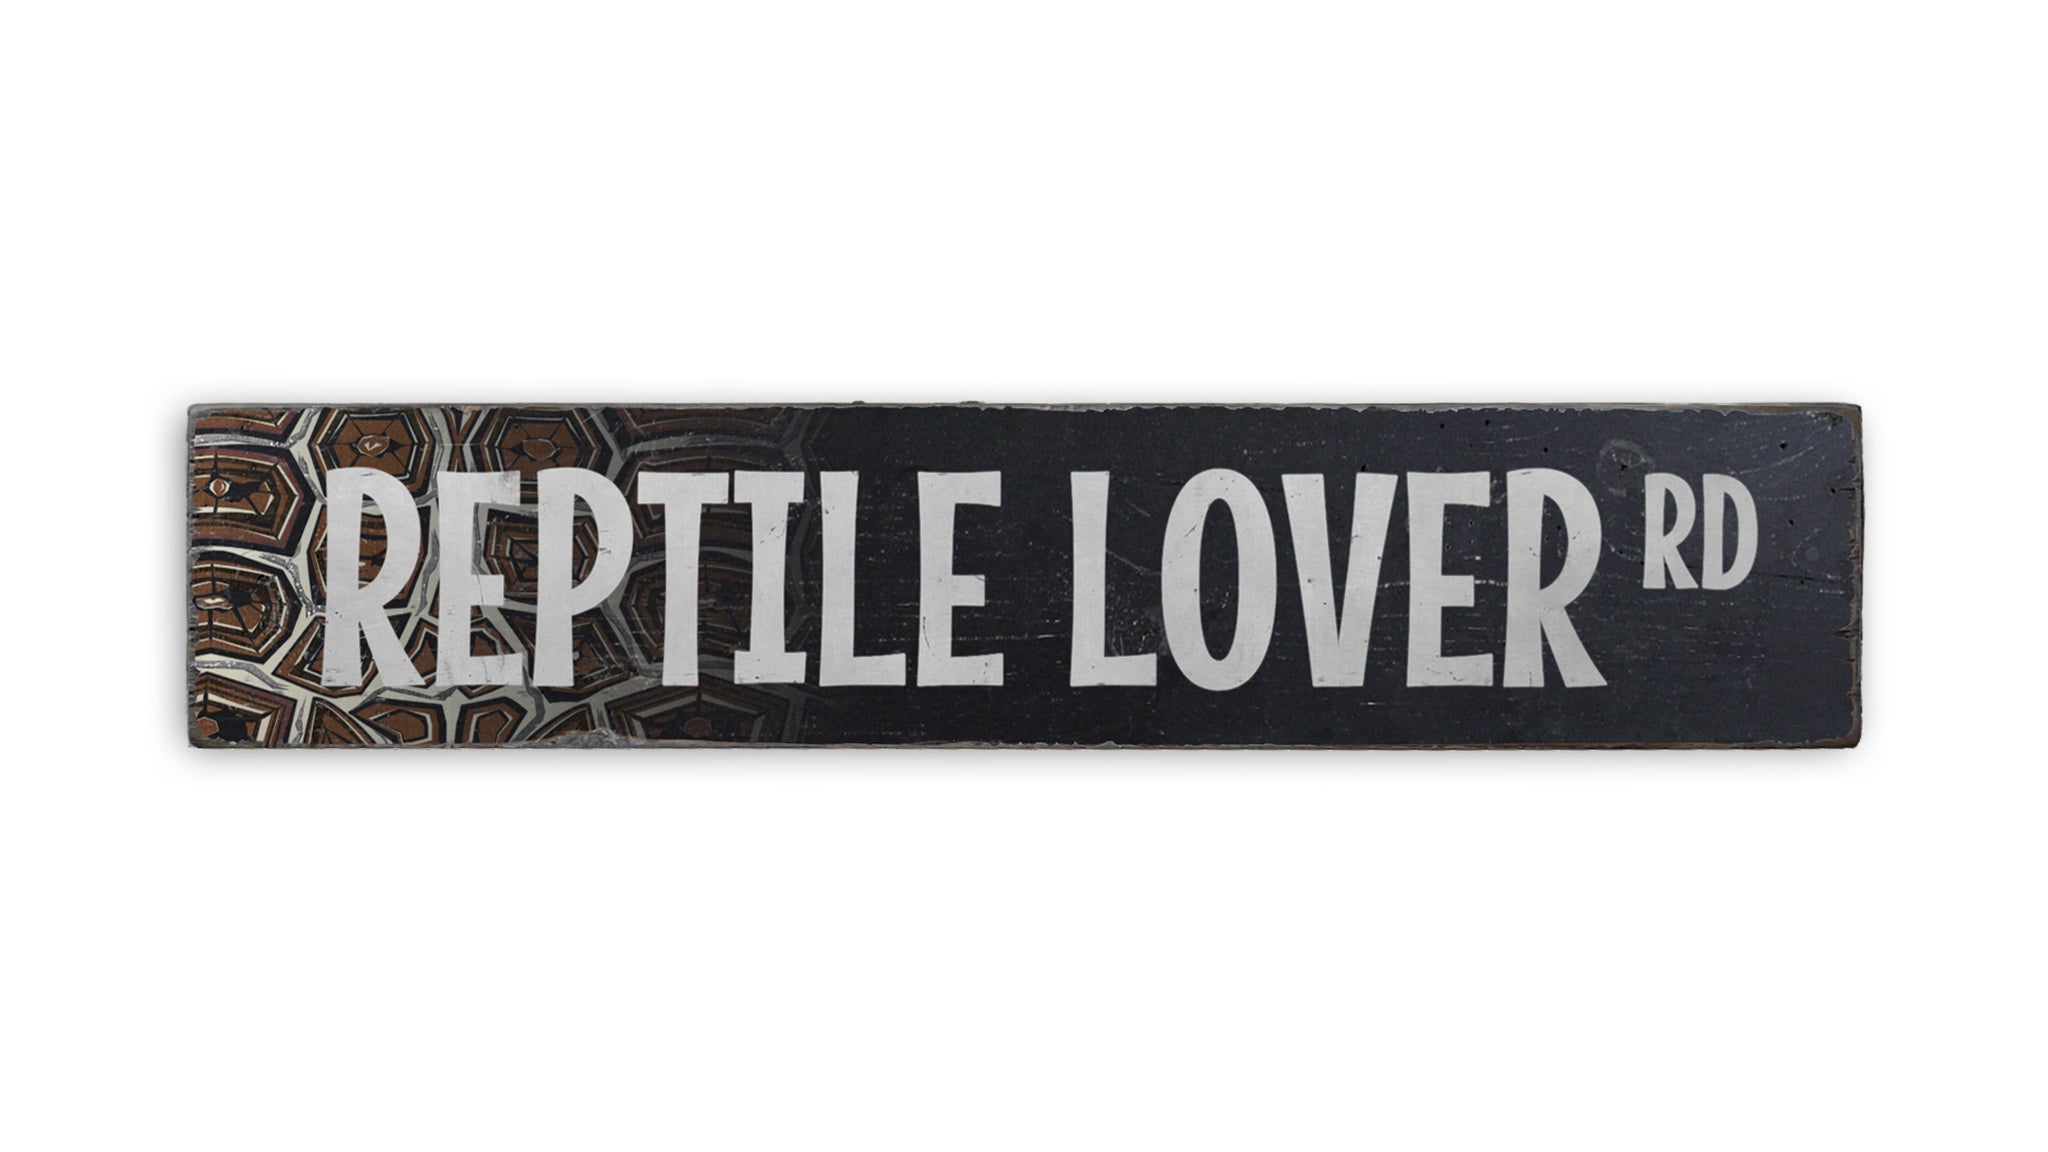 Reptile Lover Street Rustic Wood Sign